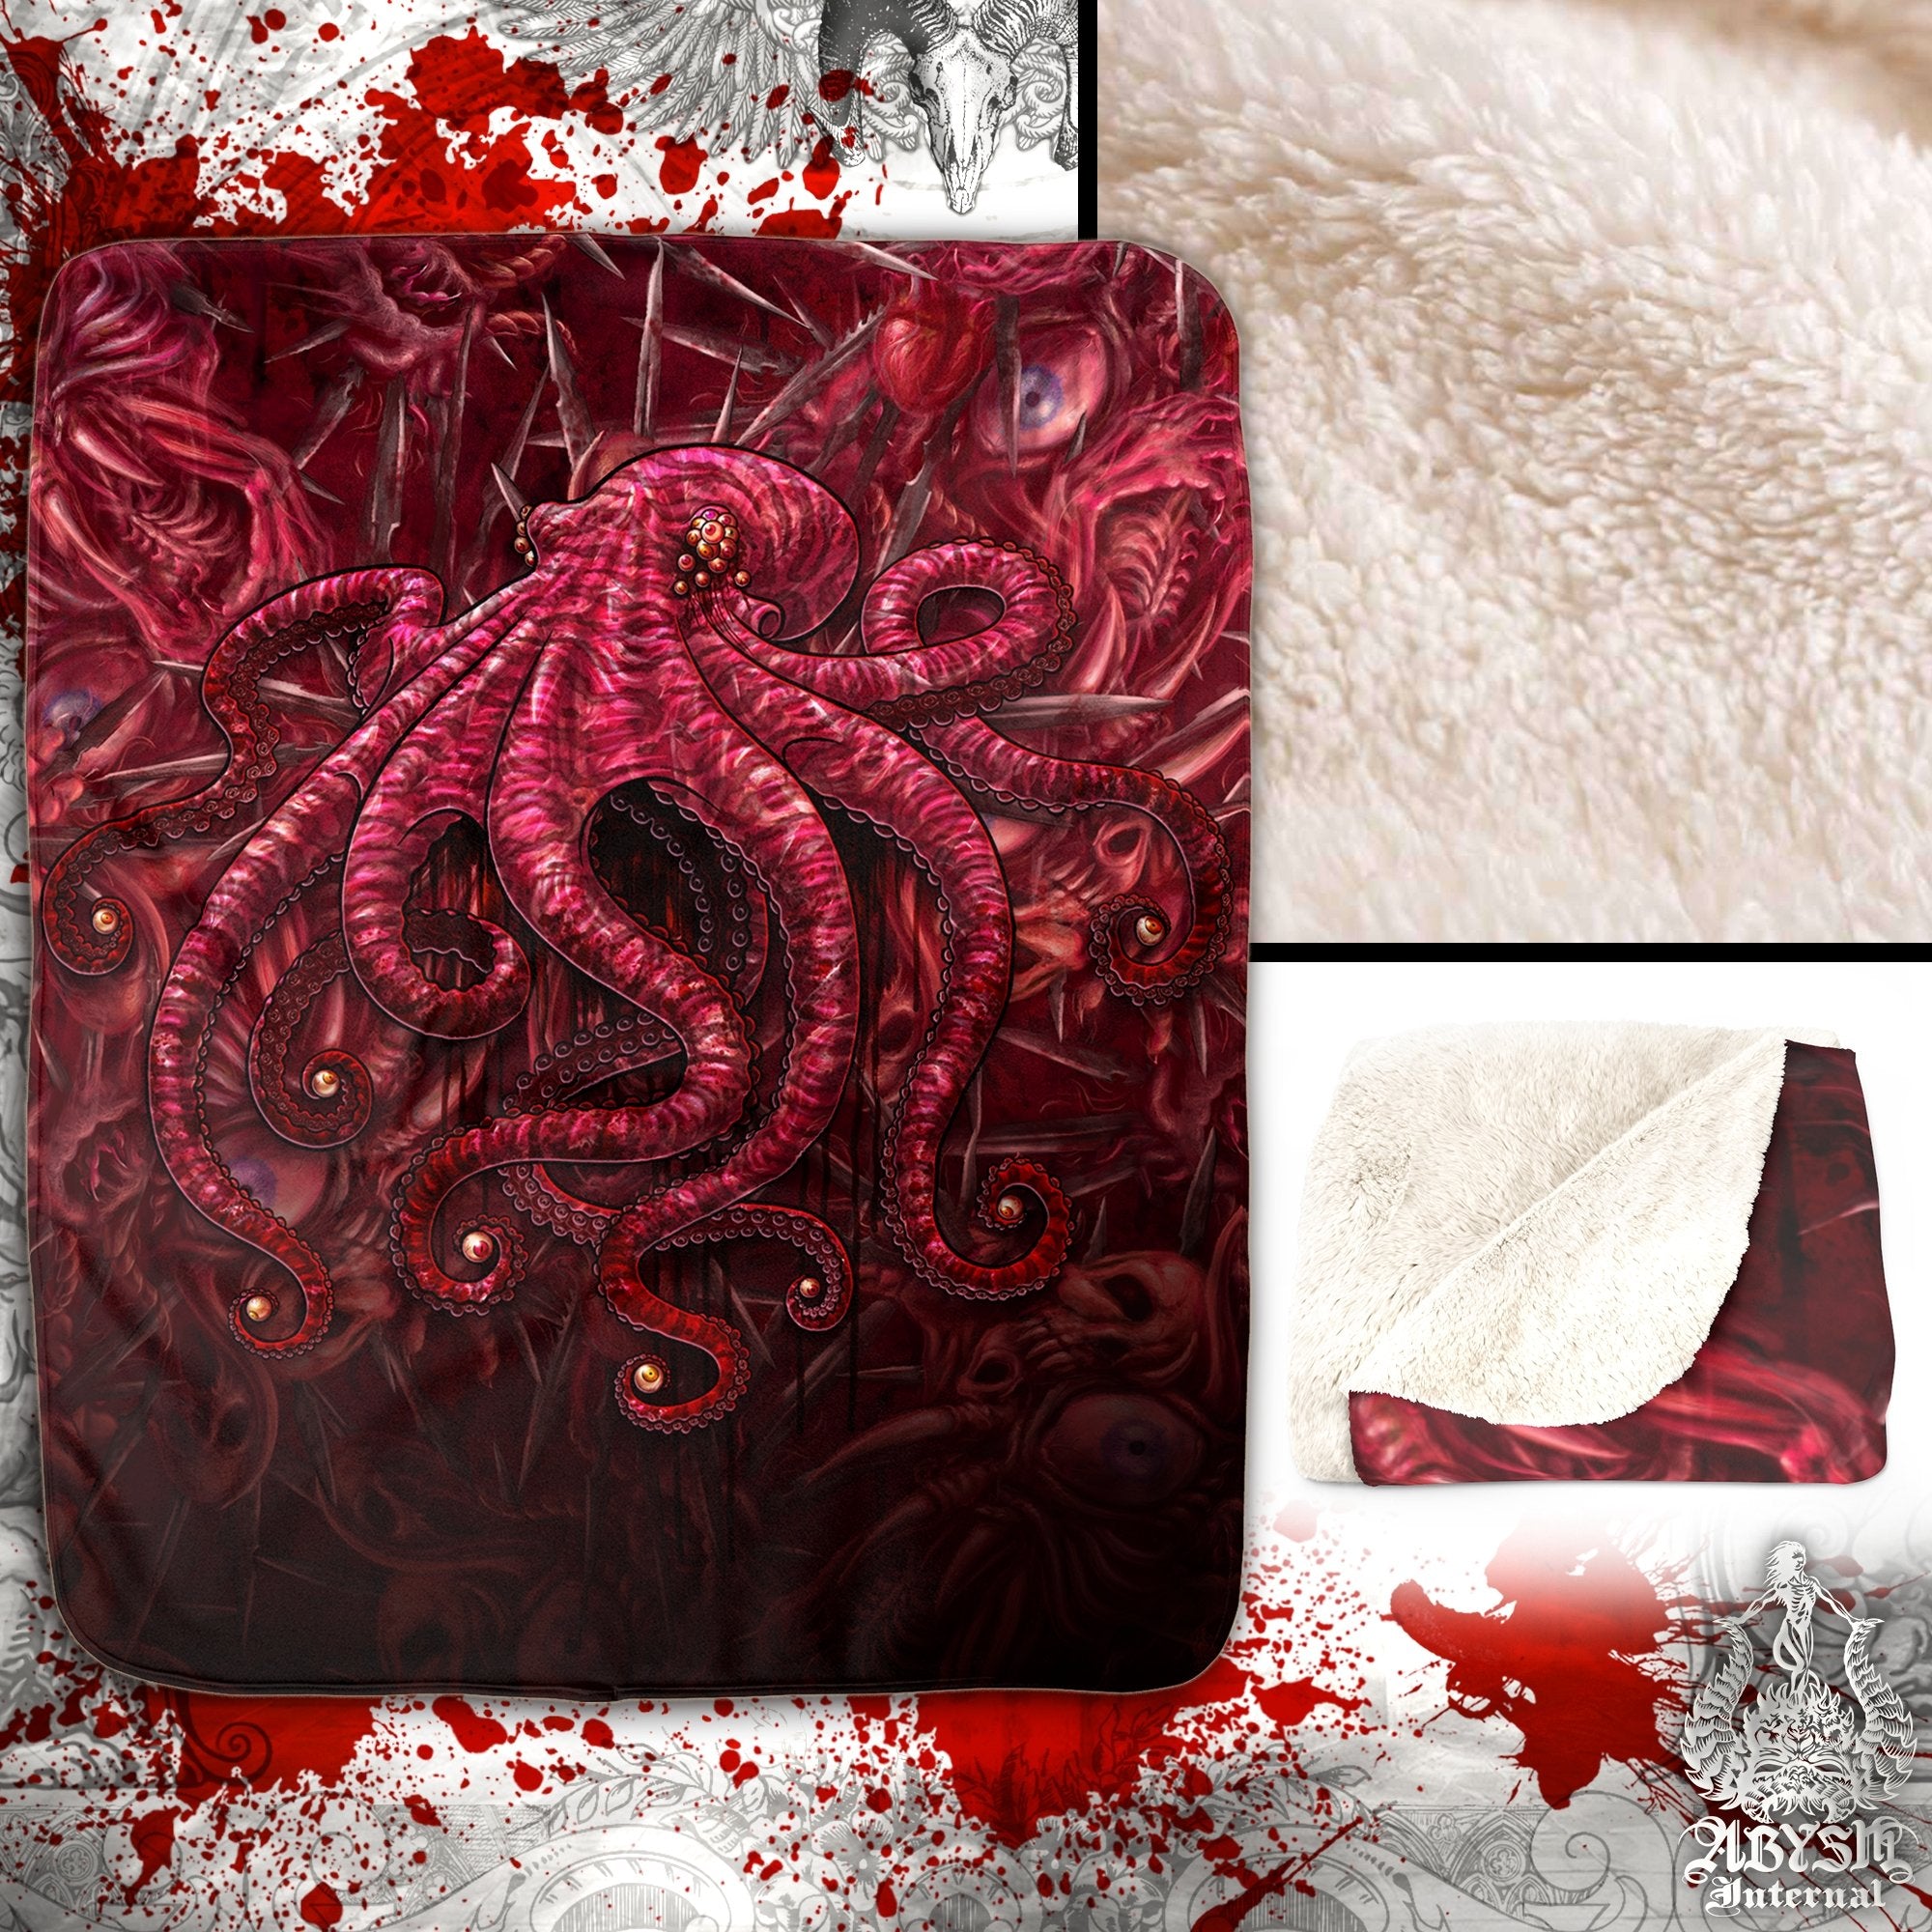 Monster Throw Fleece Blanket, Halloween Gift, Horror Home Decor - Eyeballs Octopus, Gore and Blood - Abysm Internal